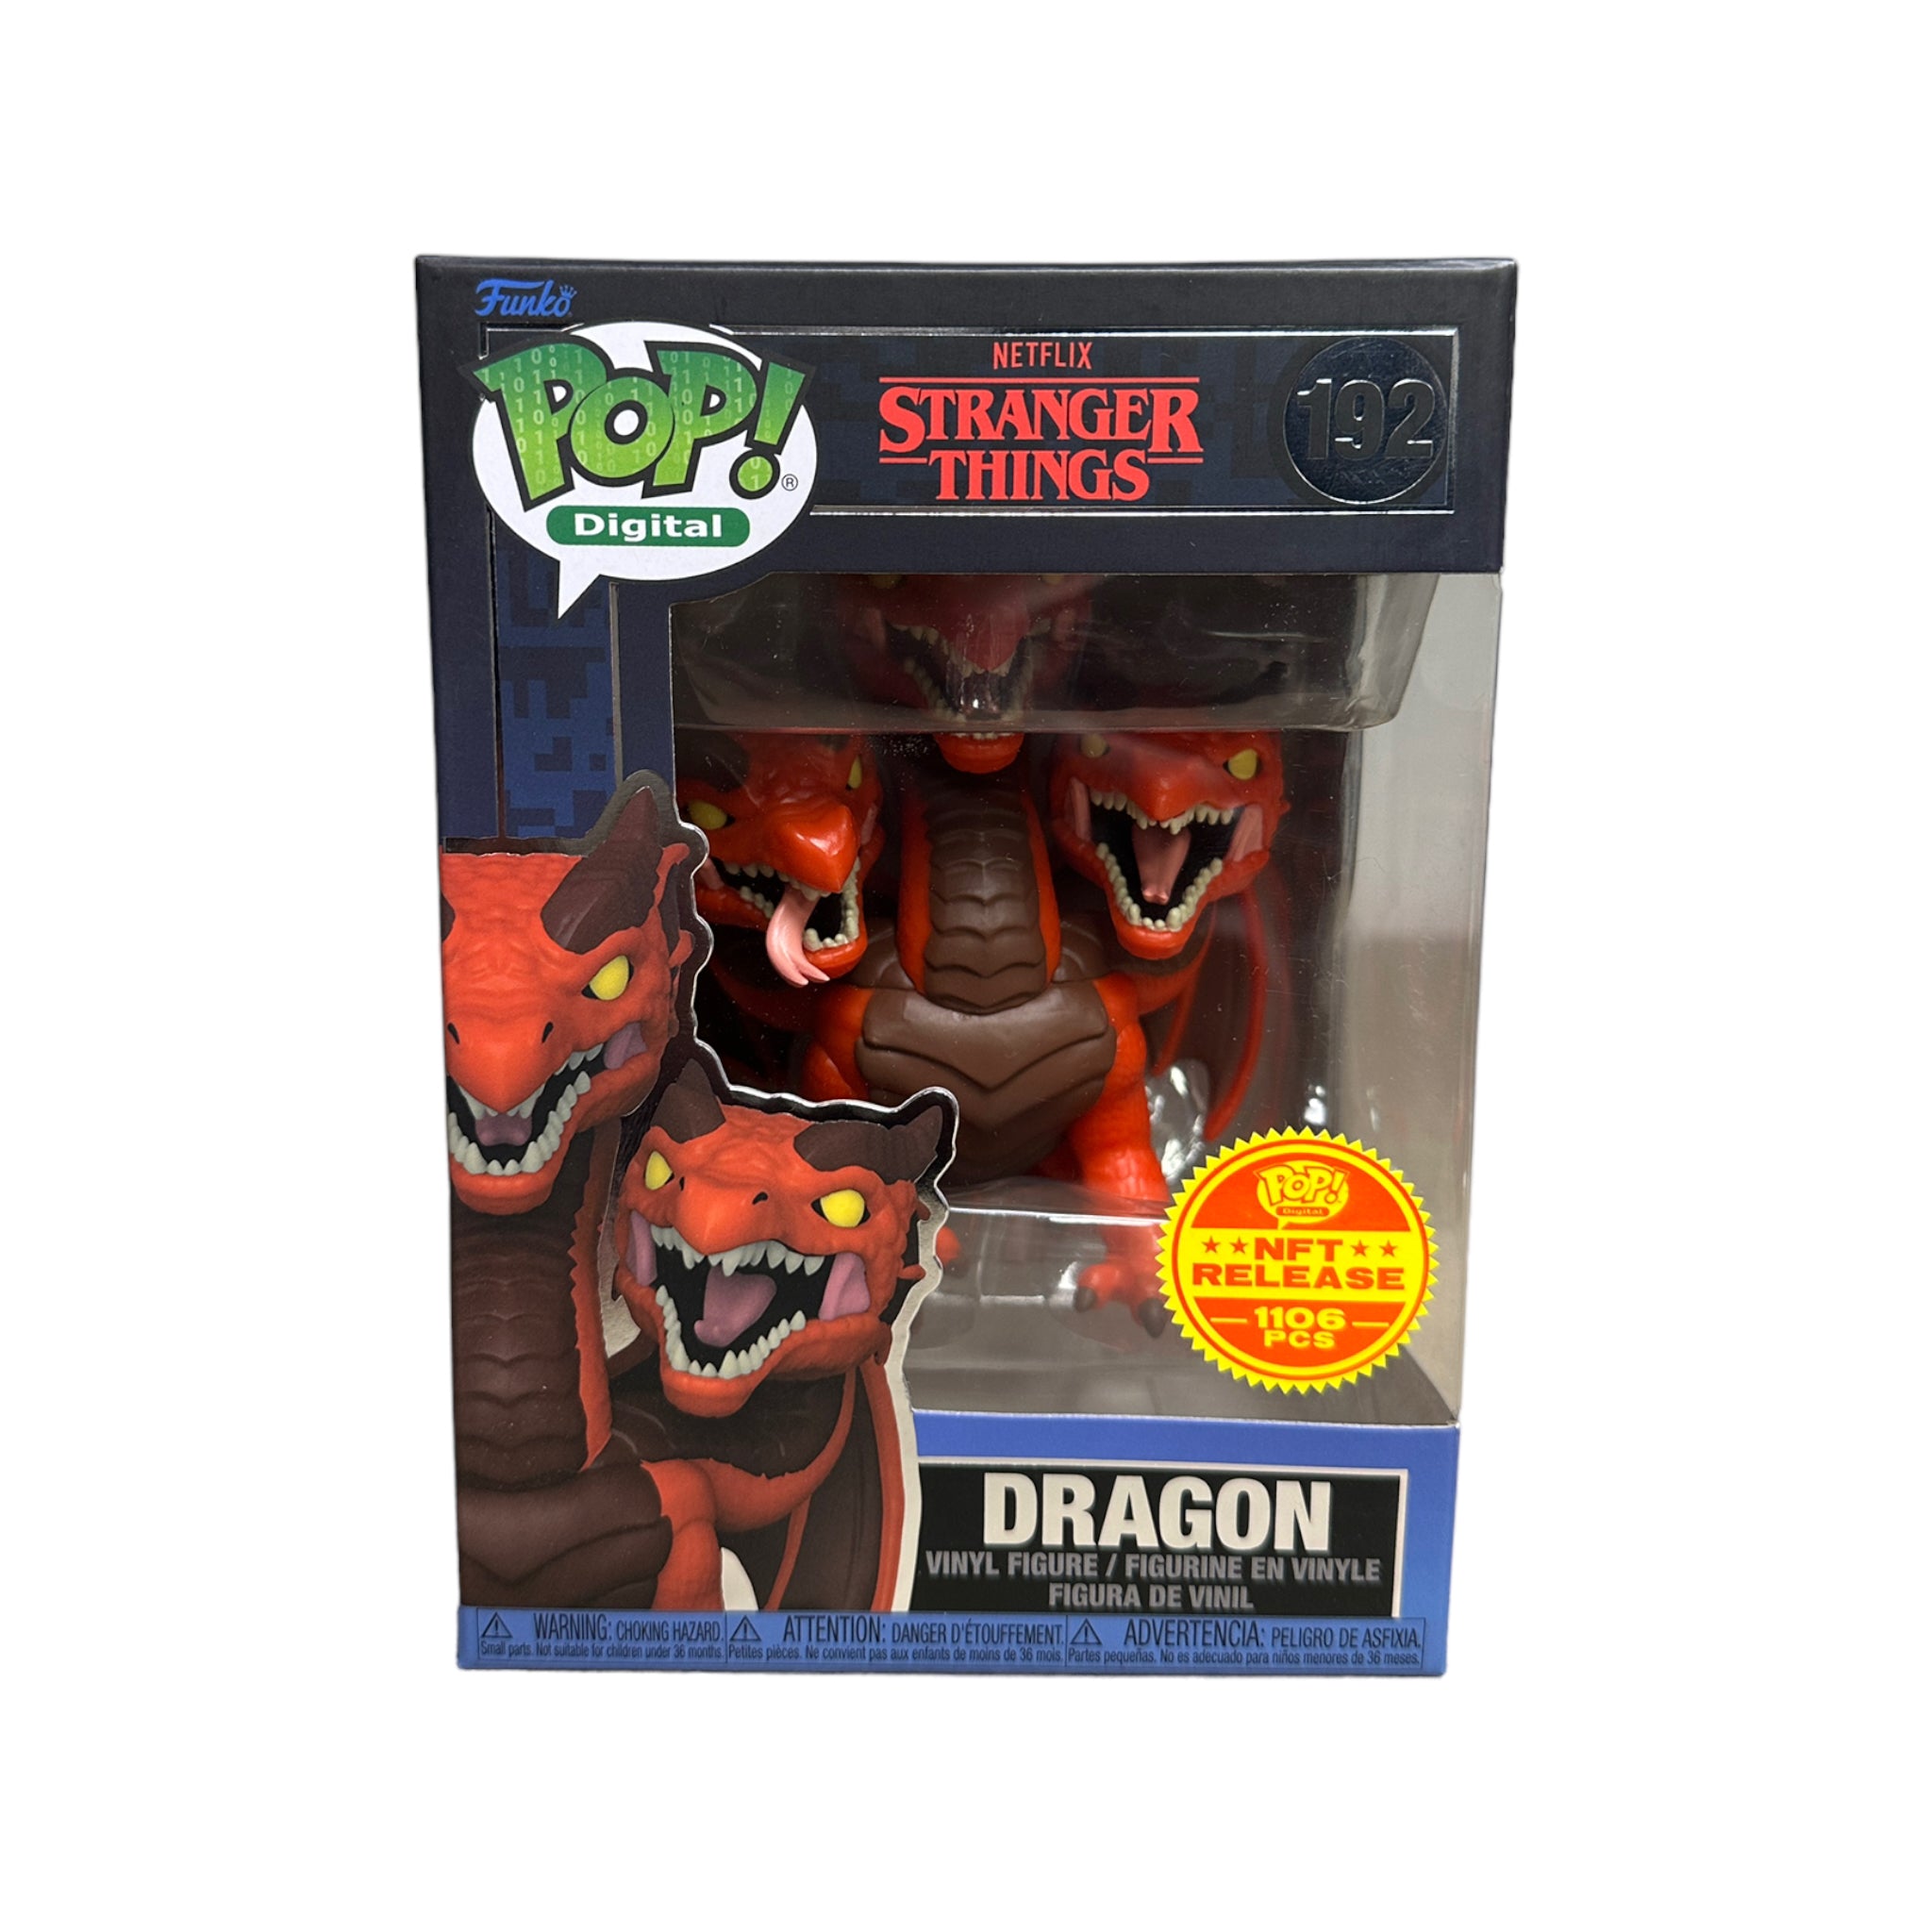 Dragon #192 Funko Pop! - Stranger Things - NFT Release Exclusive LE1106 Pcs - Condition 8/10